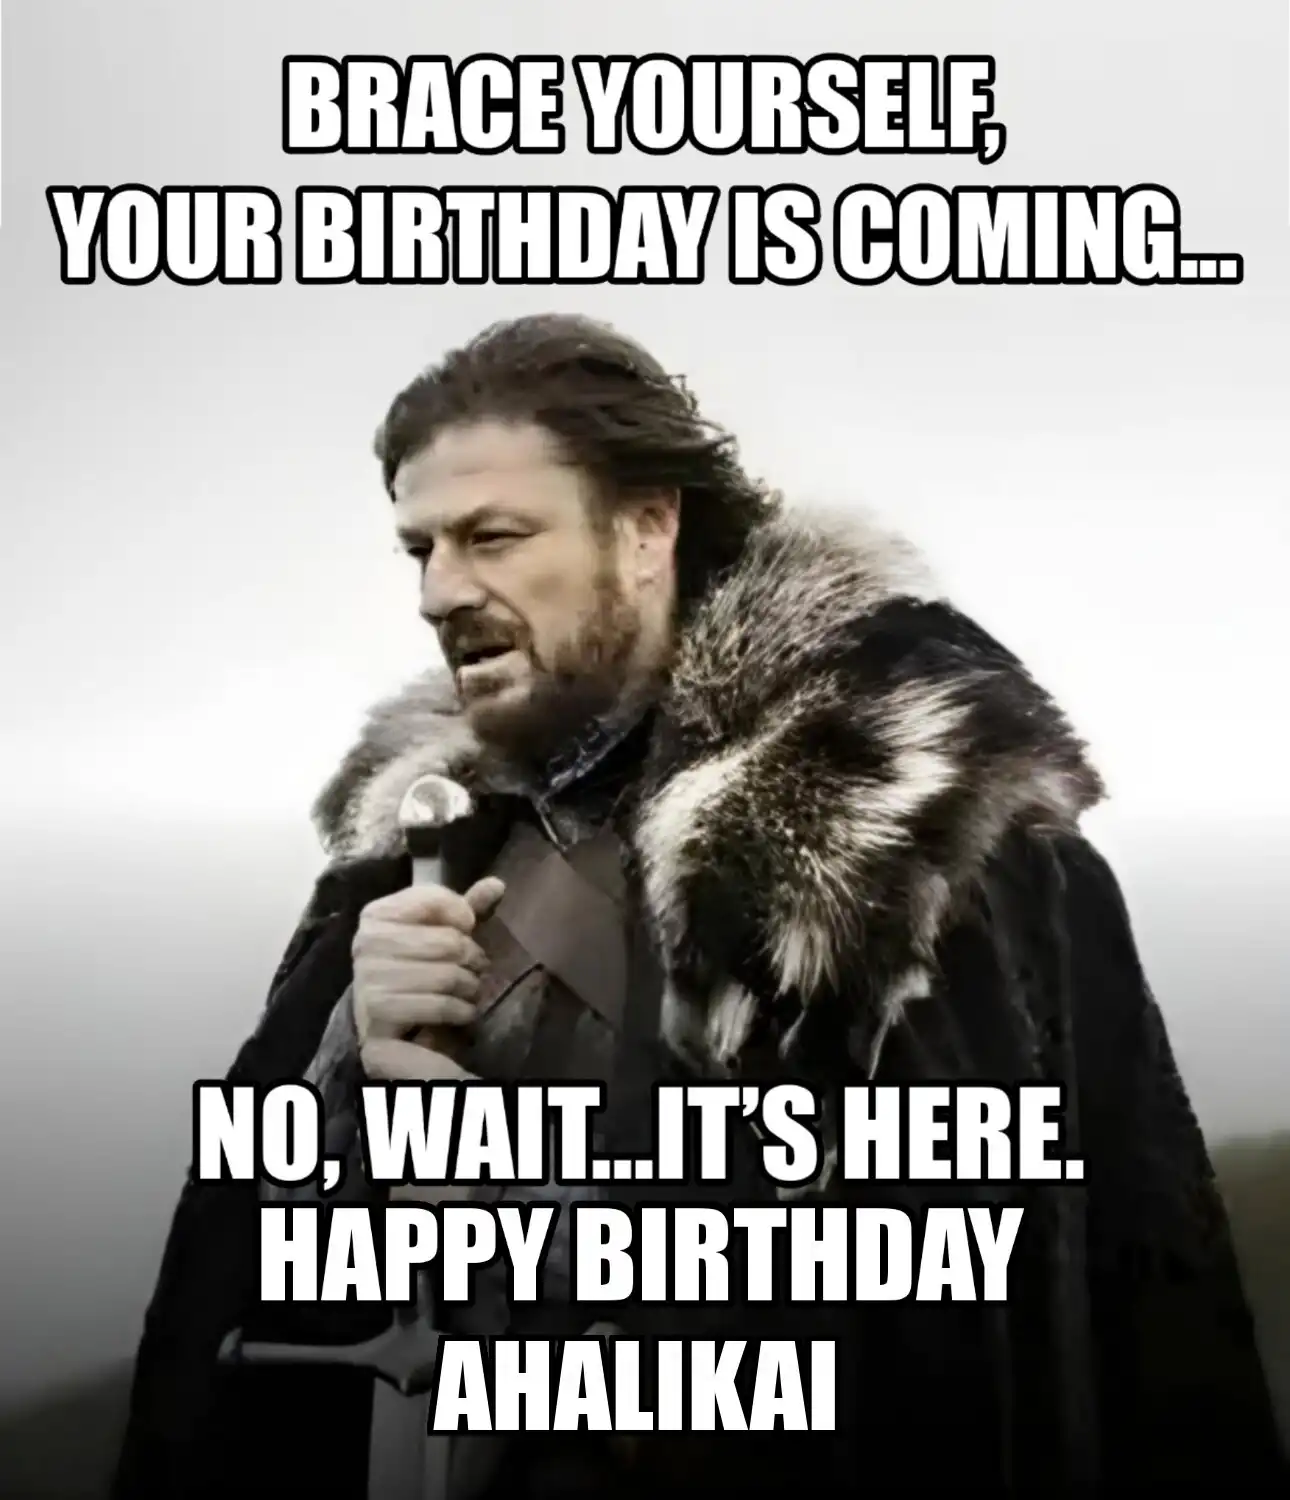 Happy Birthday Ahalikai Brace Yourself Your Birthday Is Coming Meme